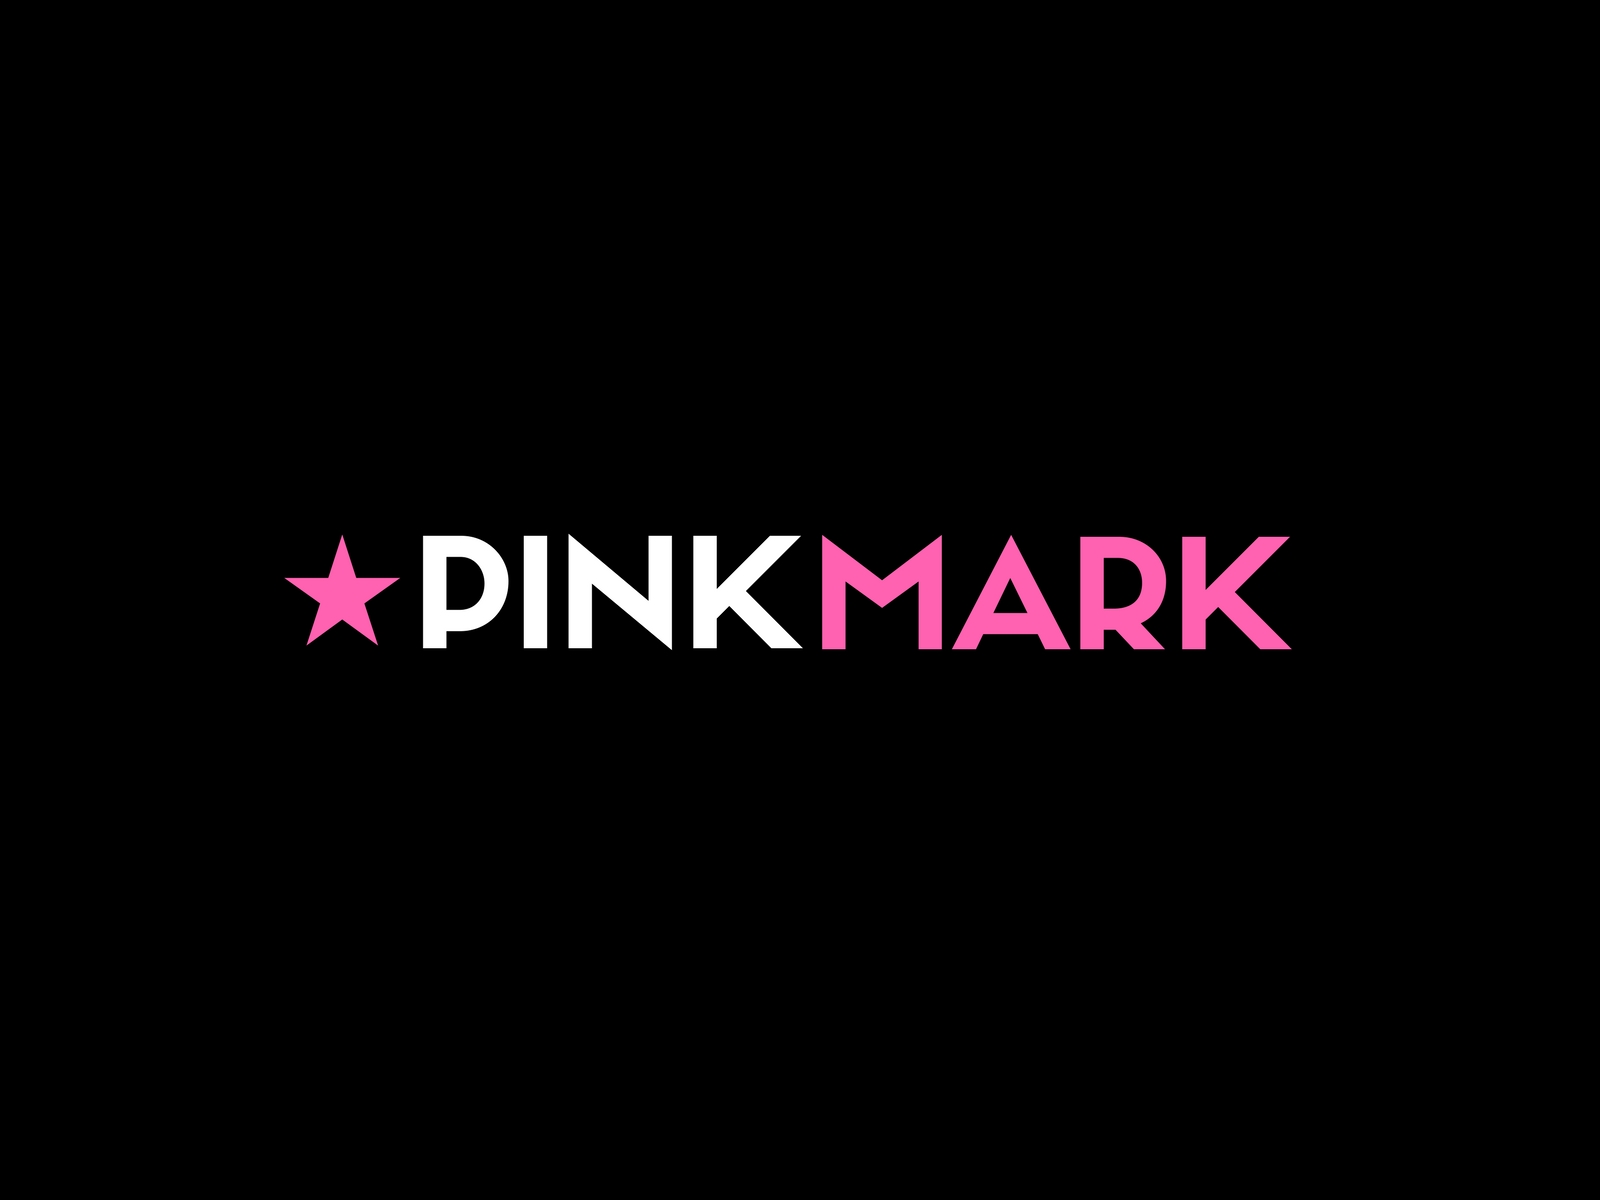 Pinkmark